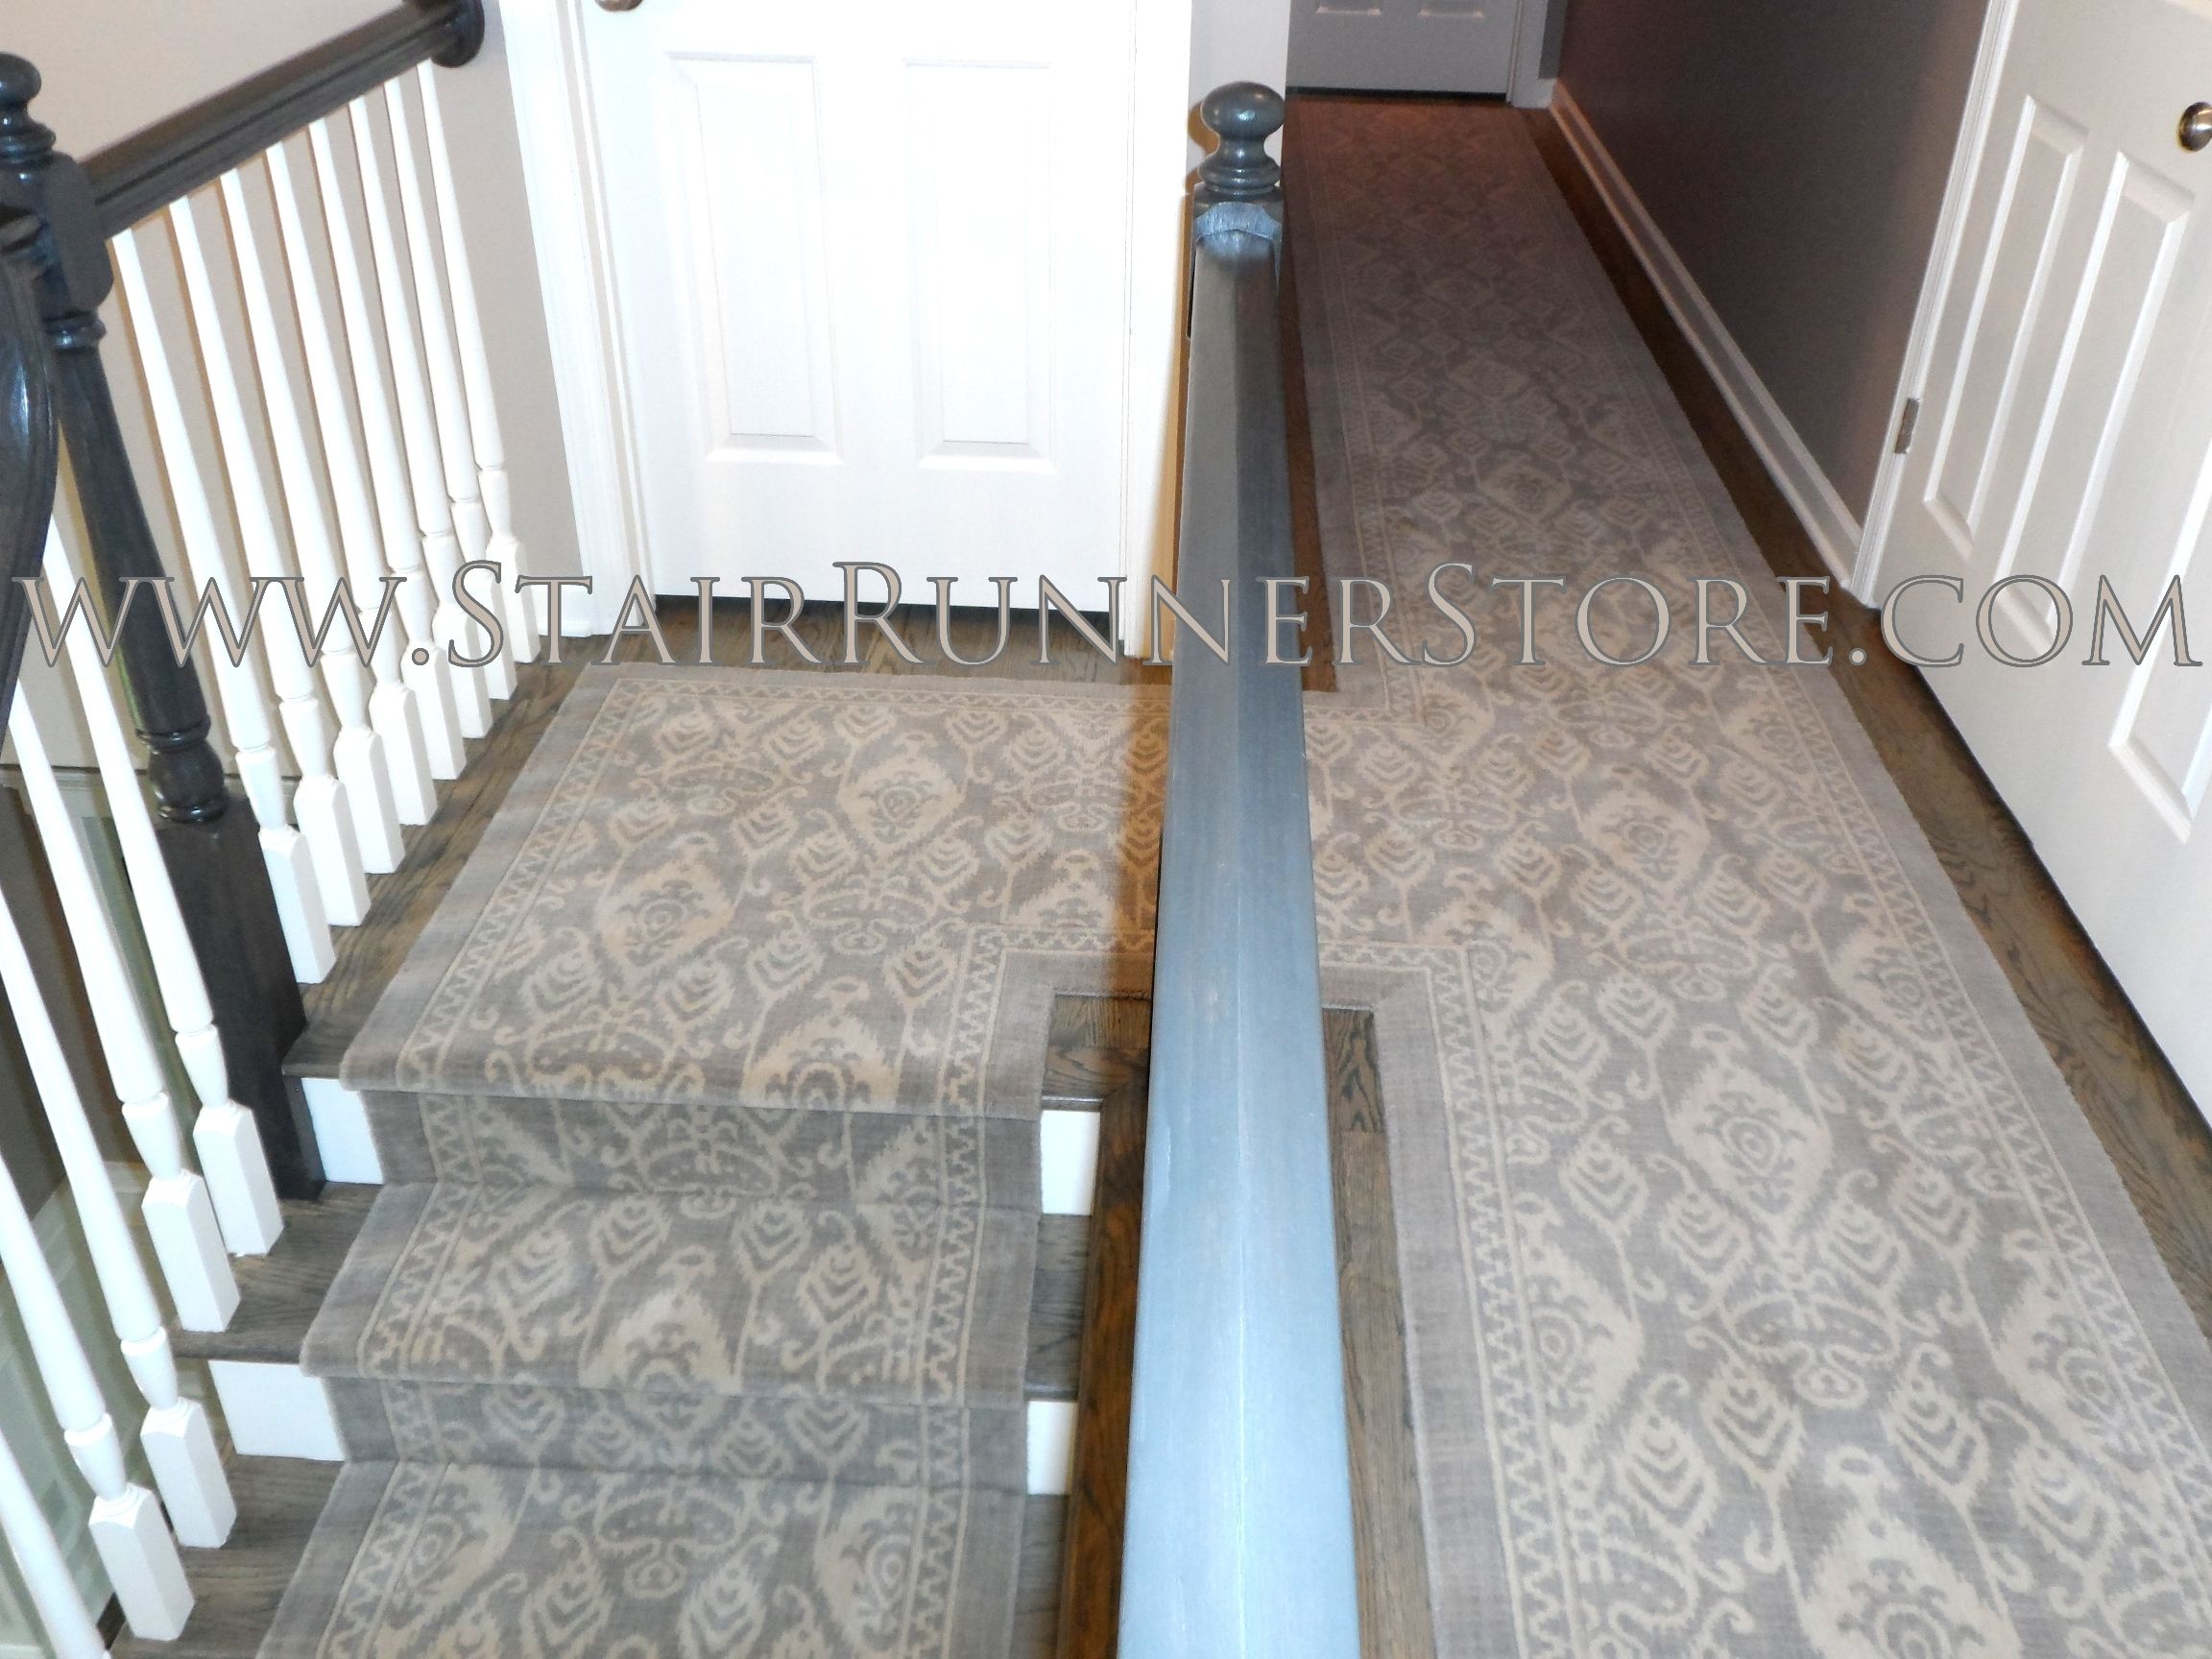 Custom Hallway Runner Installations Stair Runner Store Blog With Long Carpet Runners For Hallways (View 13 of 20)